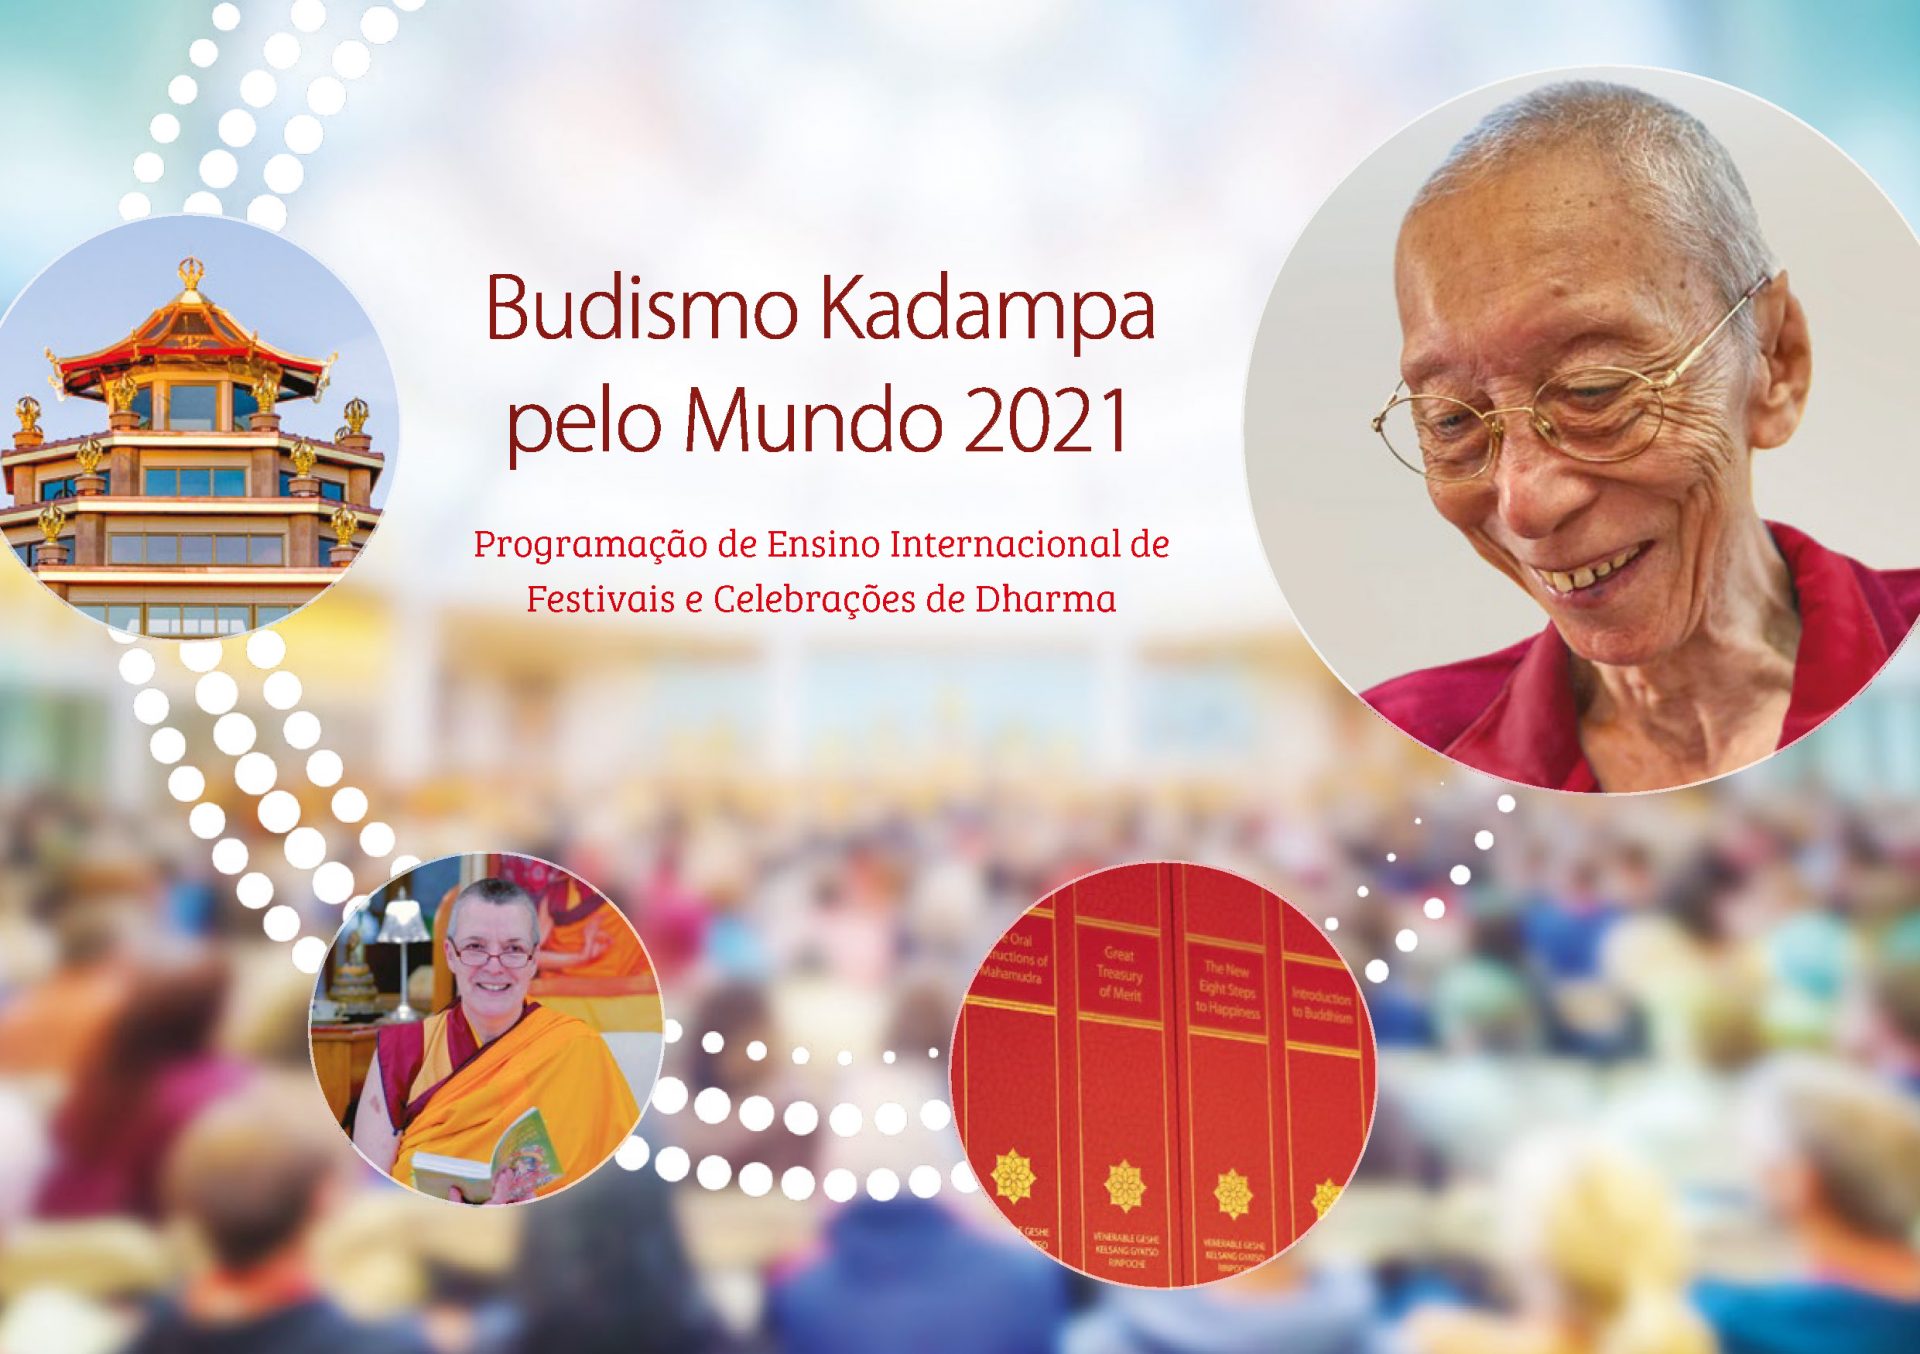 Budismo Kadampa Mundial